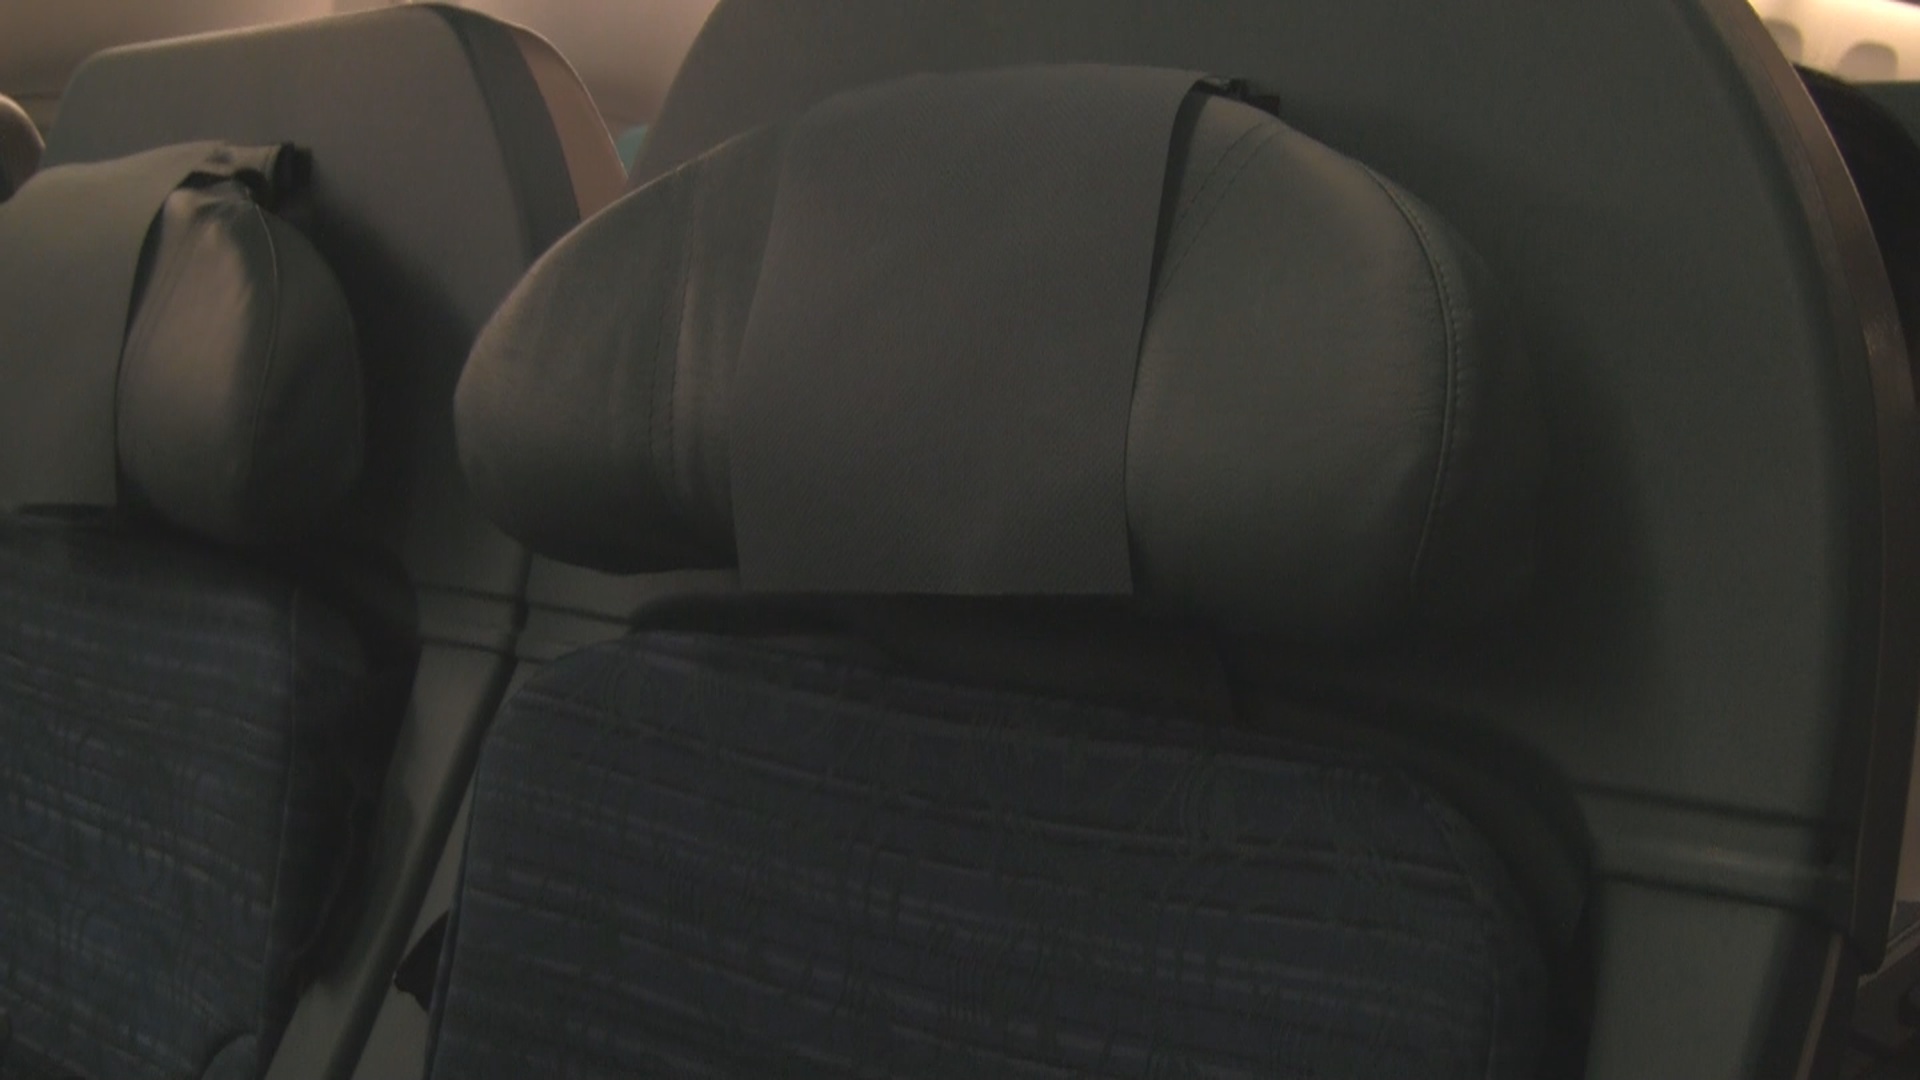 a black headrest in a car